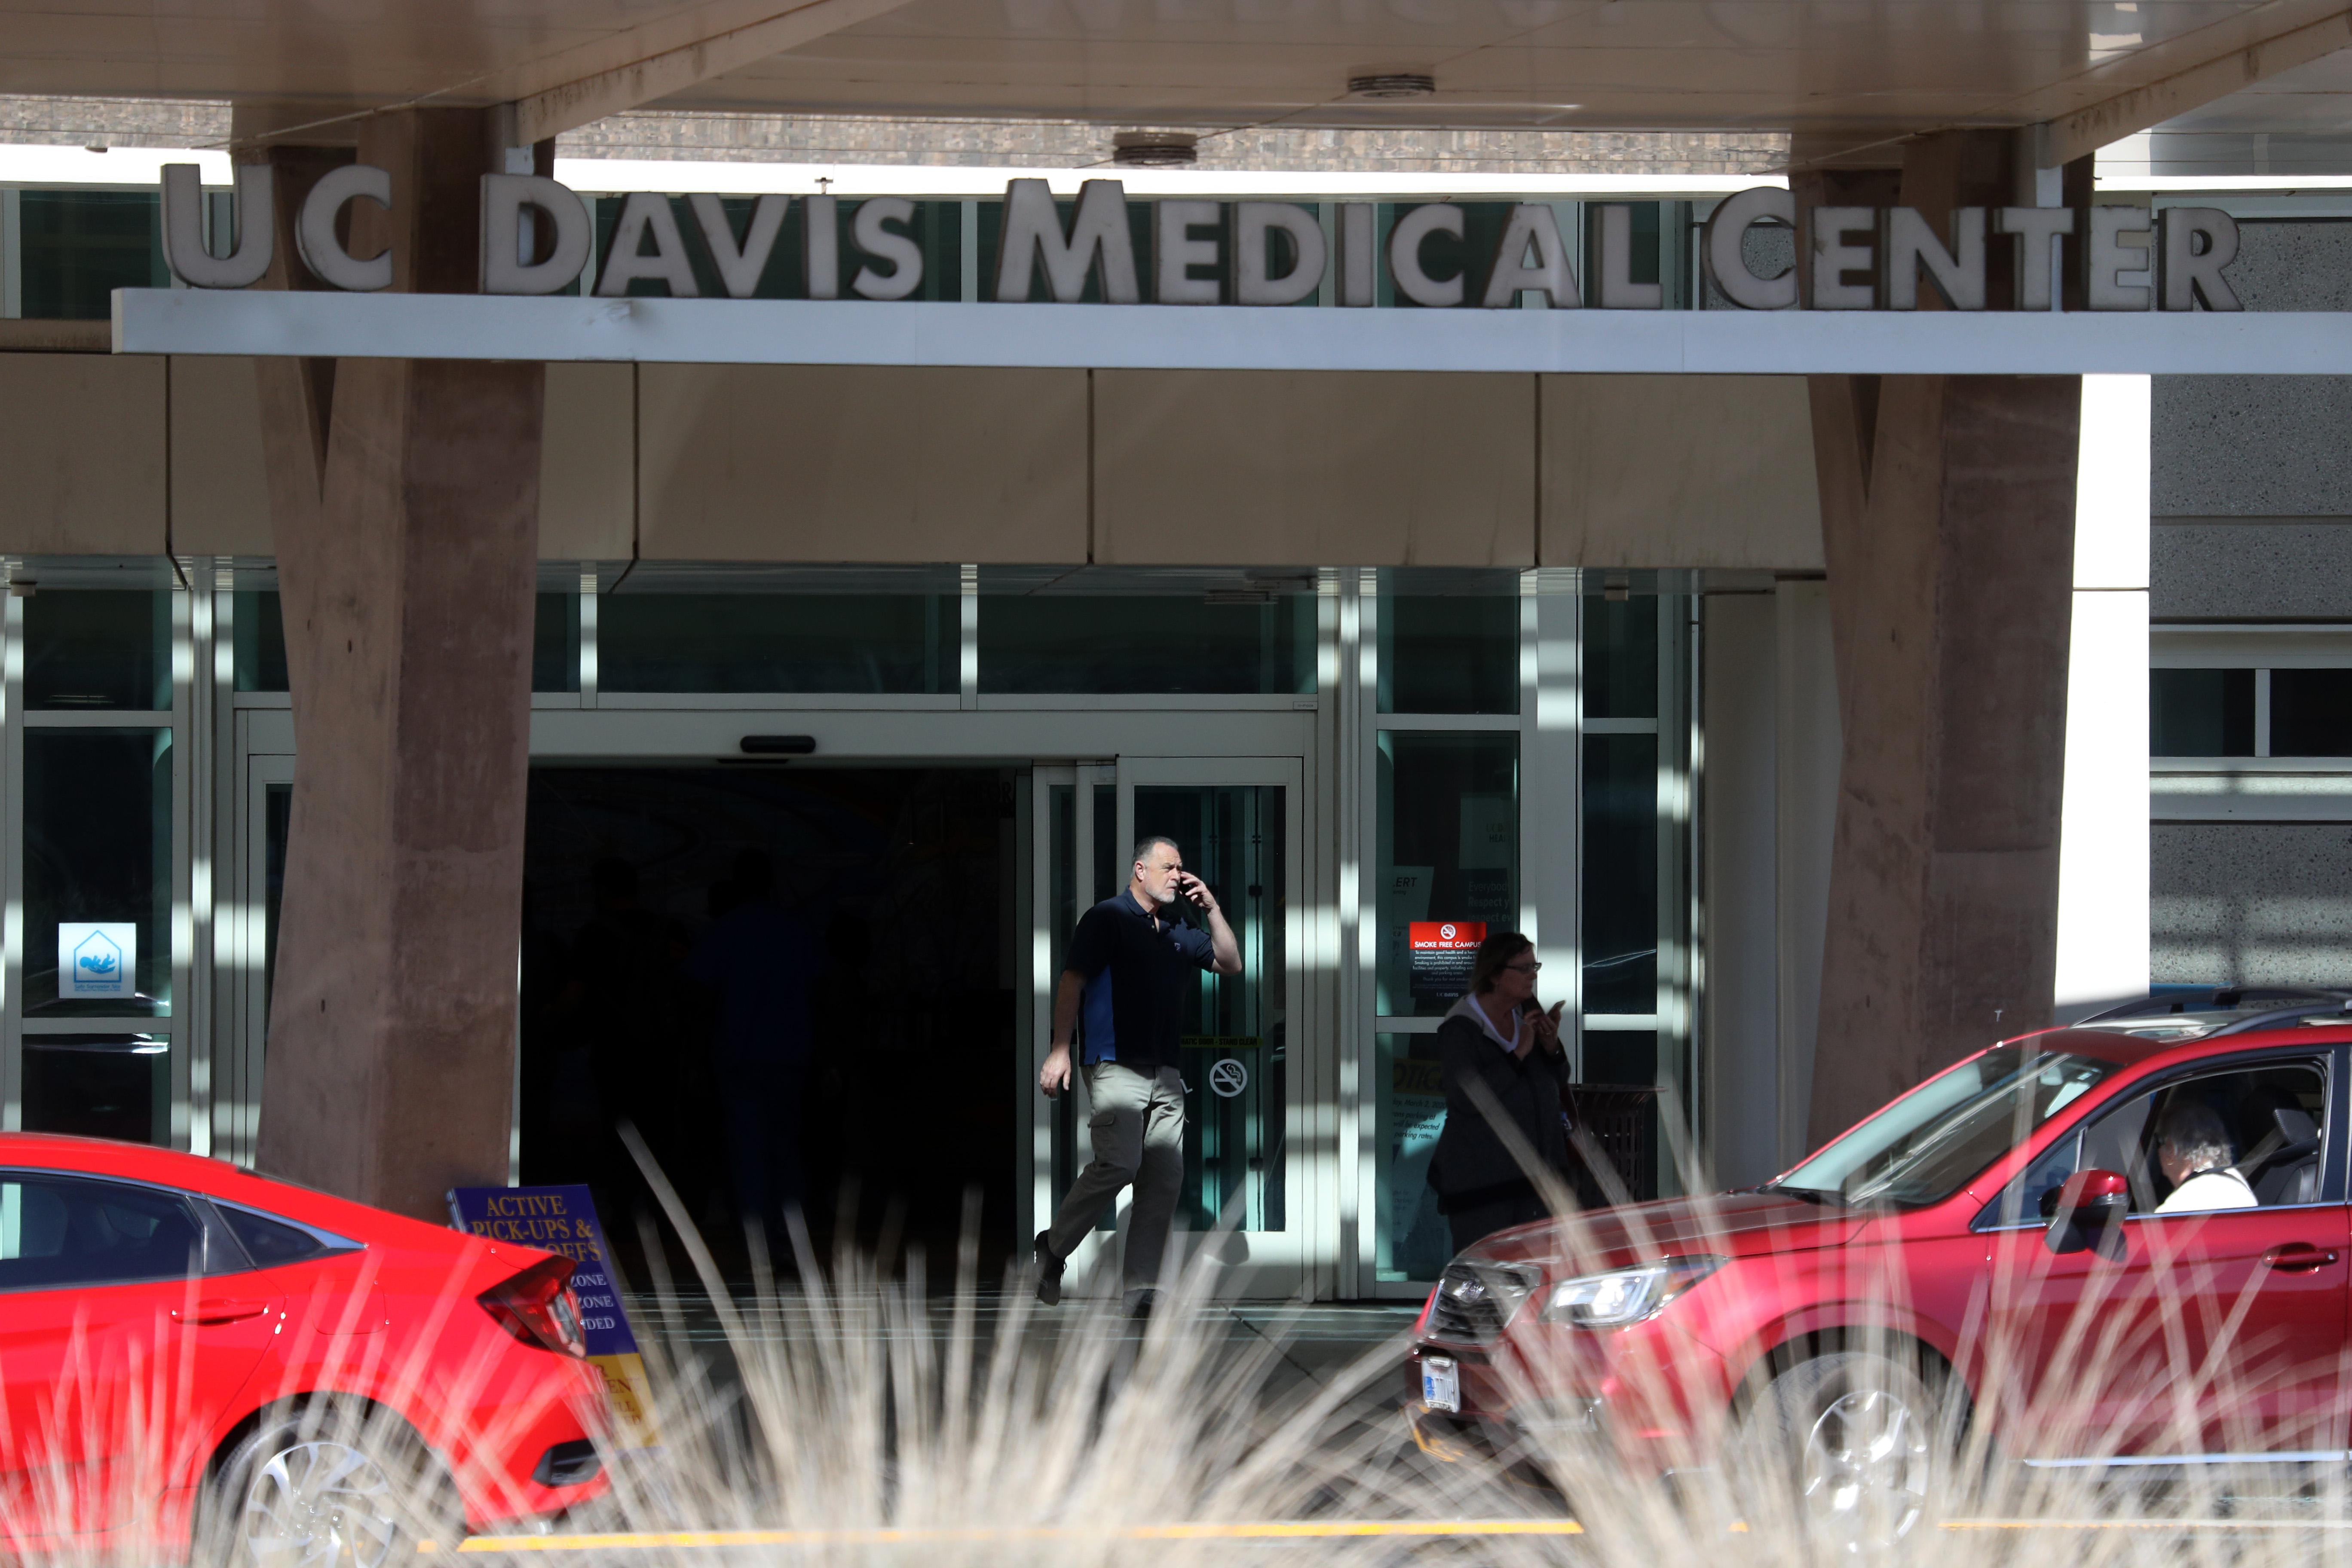 Exterior of UC Davis Medical Center.